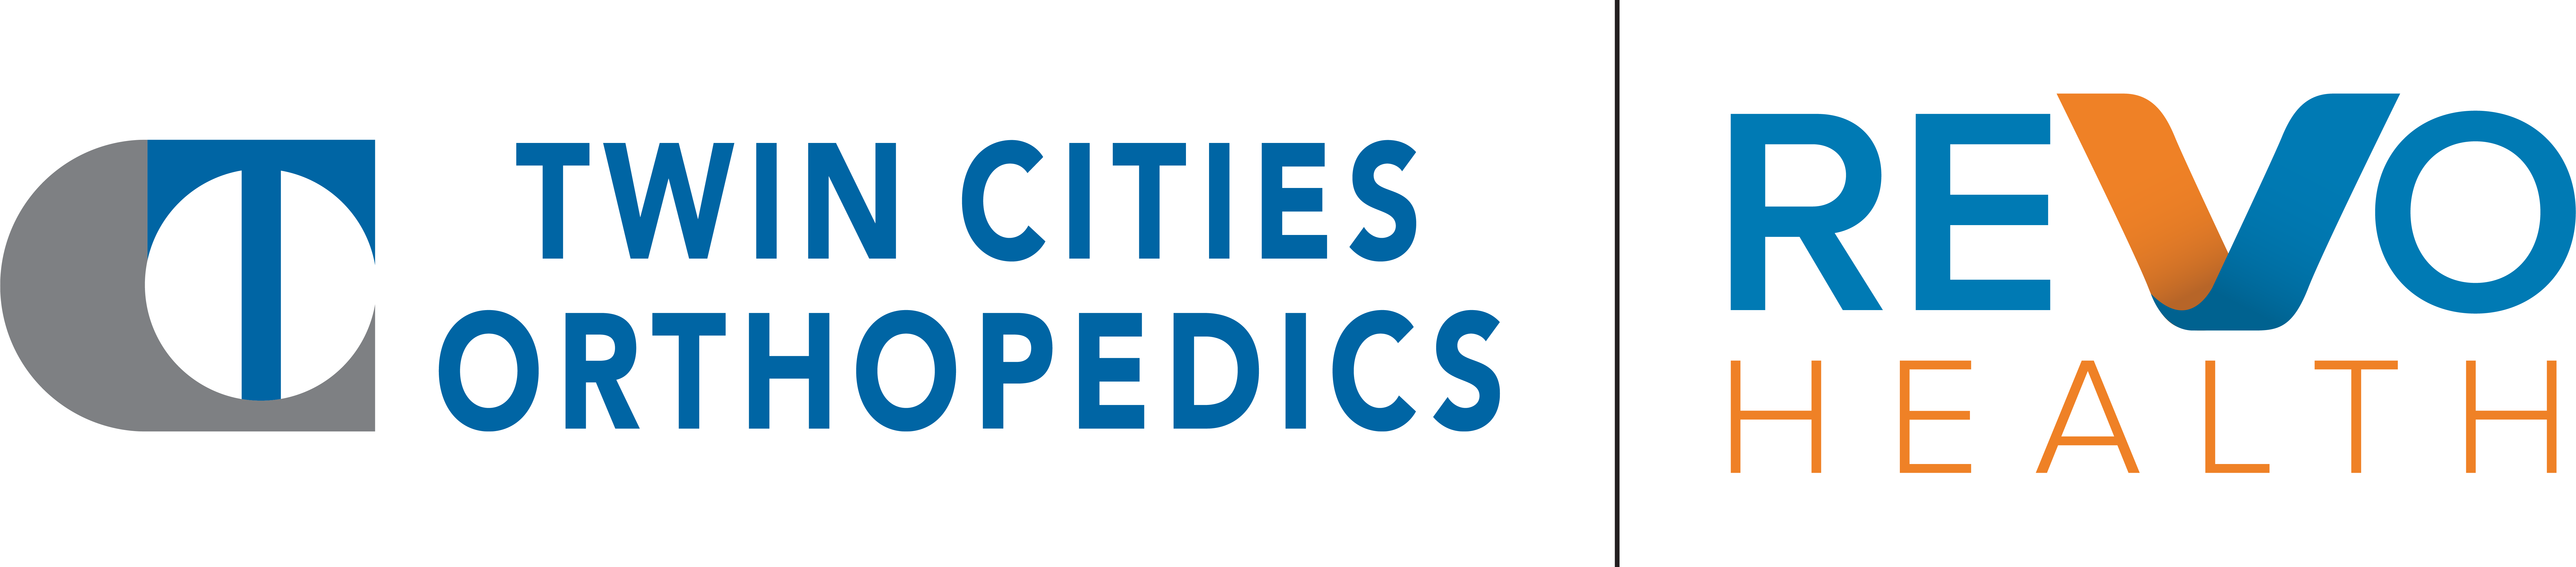 Twin Cities Orthopedics/Revo Health logo